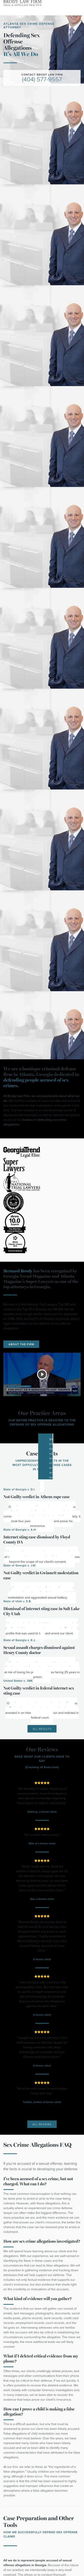 Brody Law Firm - Atlanta GA Lawyers